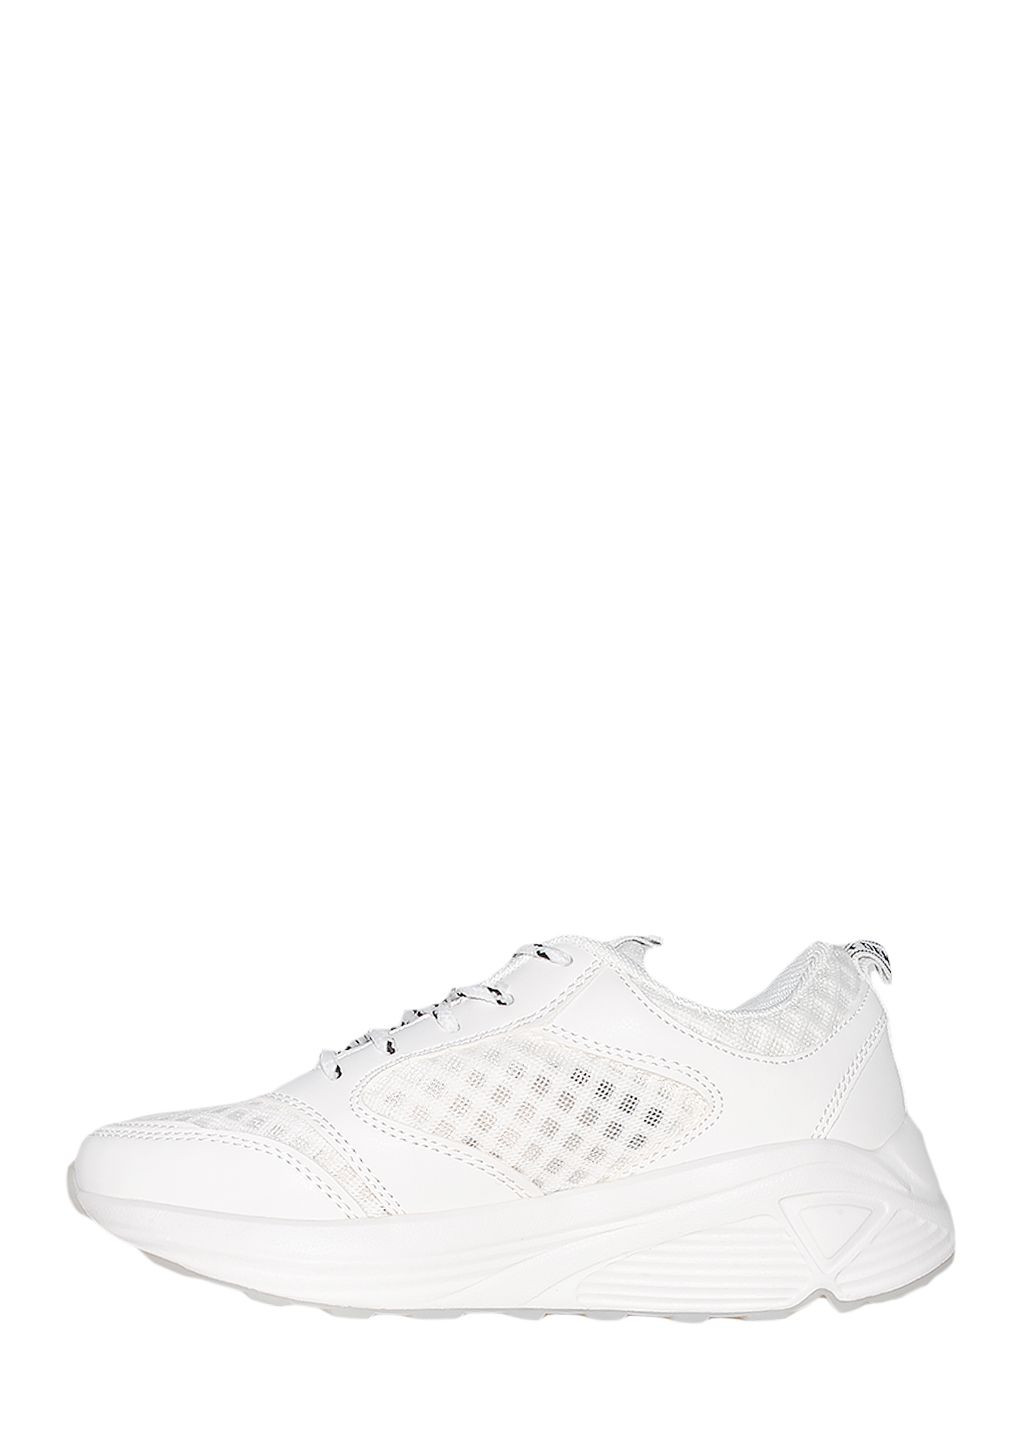 Білі осінні кросівки st8398-8 white Stilli